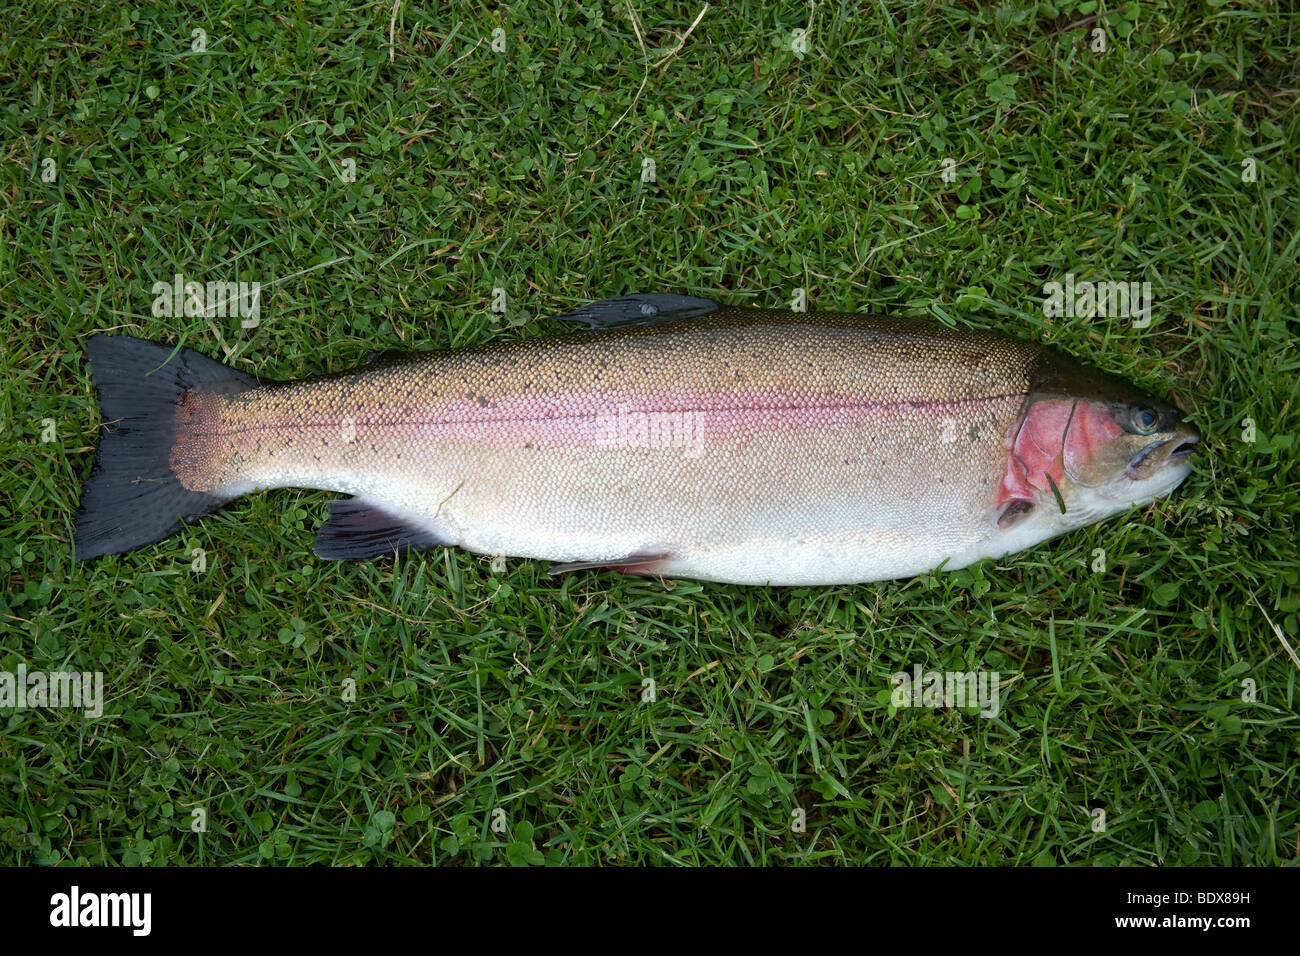 Large 5lb 4oz rainbow trout caught at Avington fishery, Winchester, Hampshire, England. Stock Photo